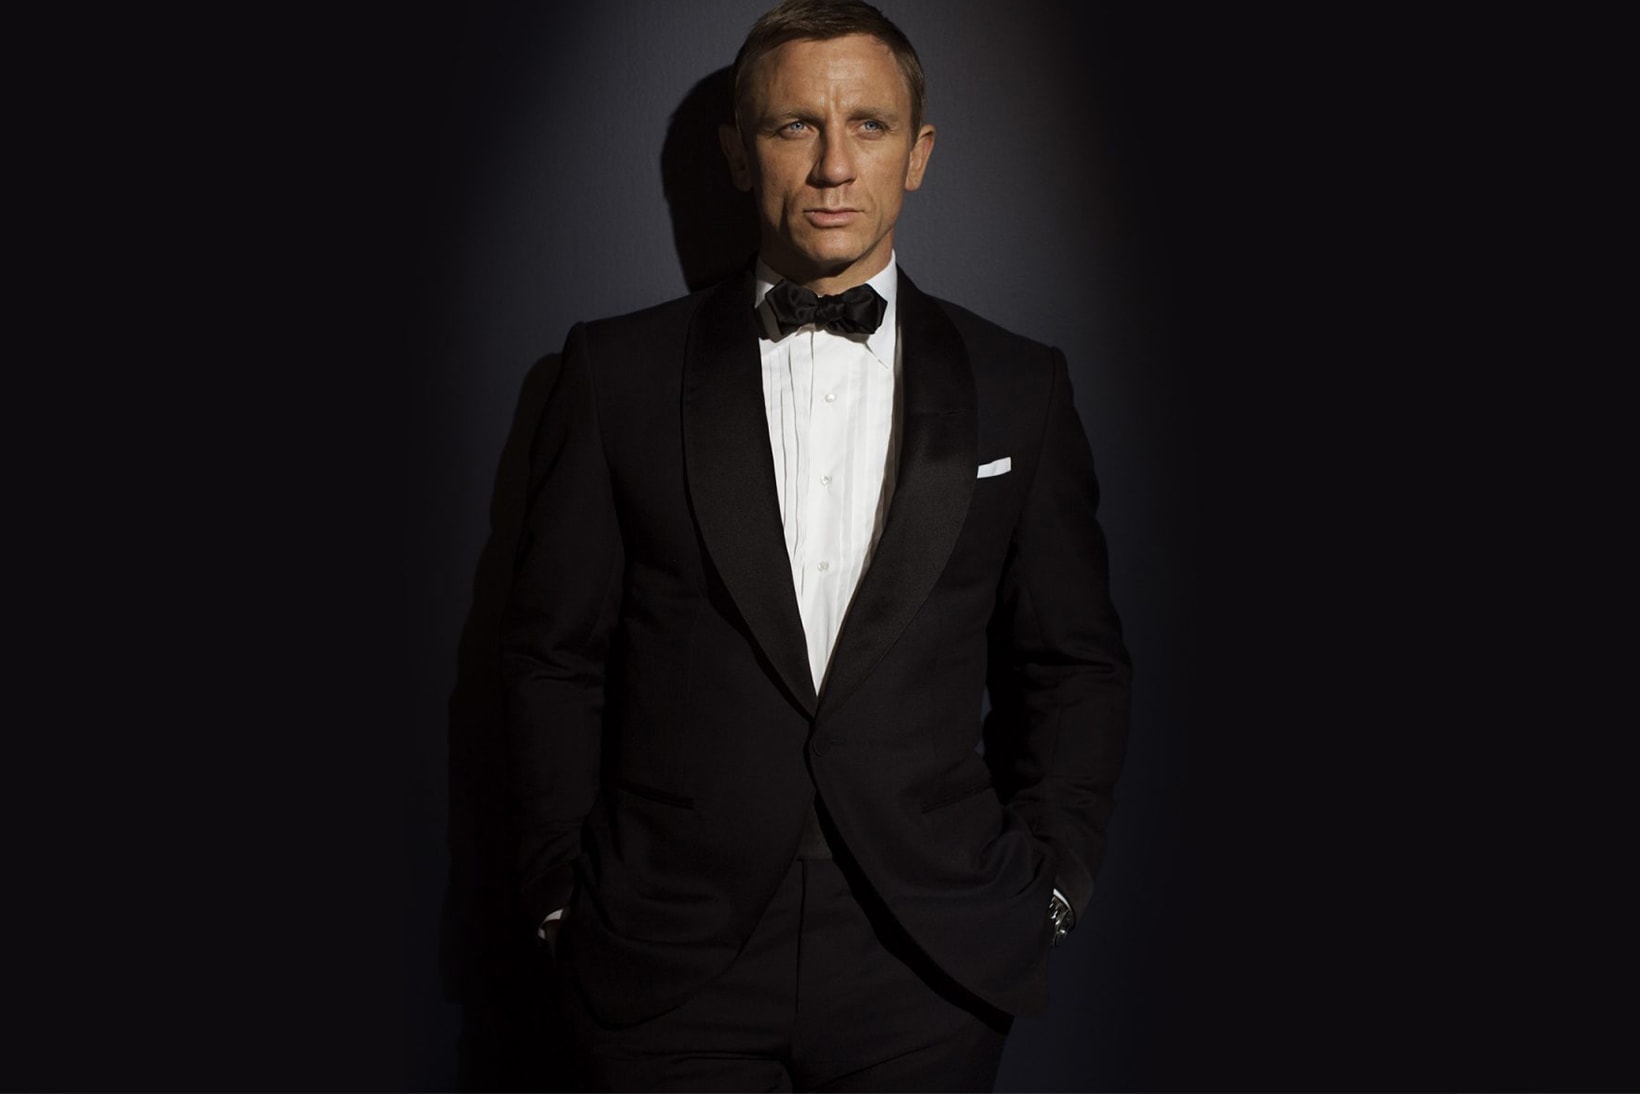 James Bond Film Rights Apple Amazon 007 Movies Sony Warner Bros Universal